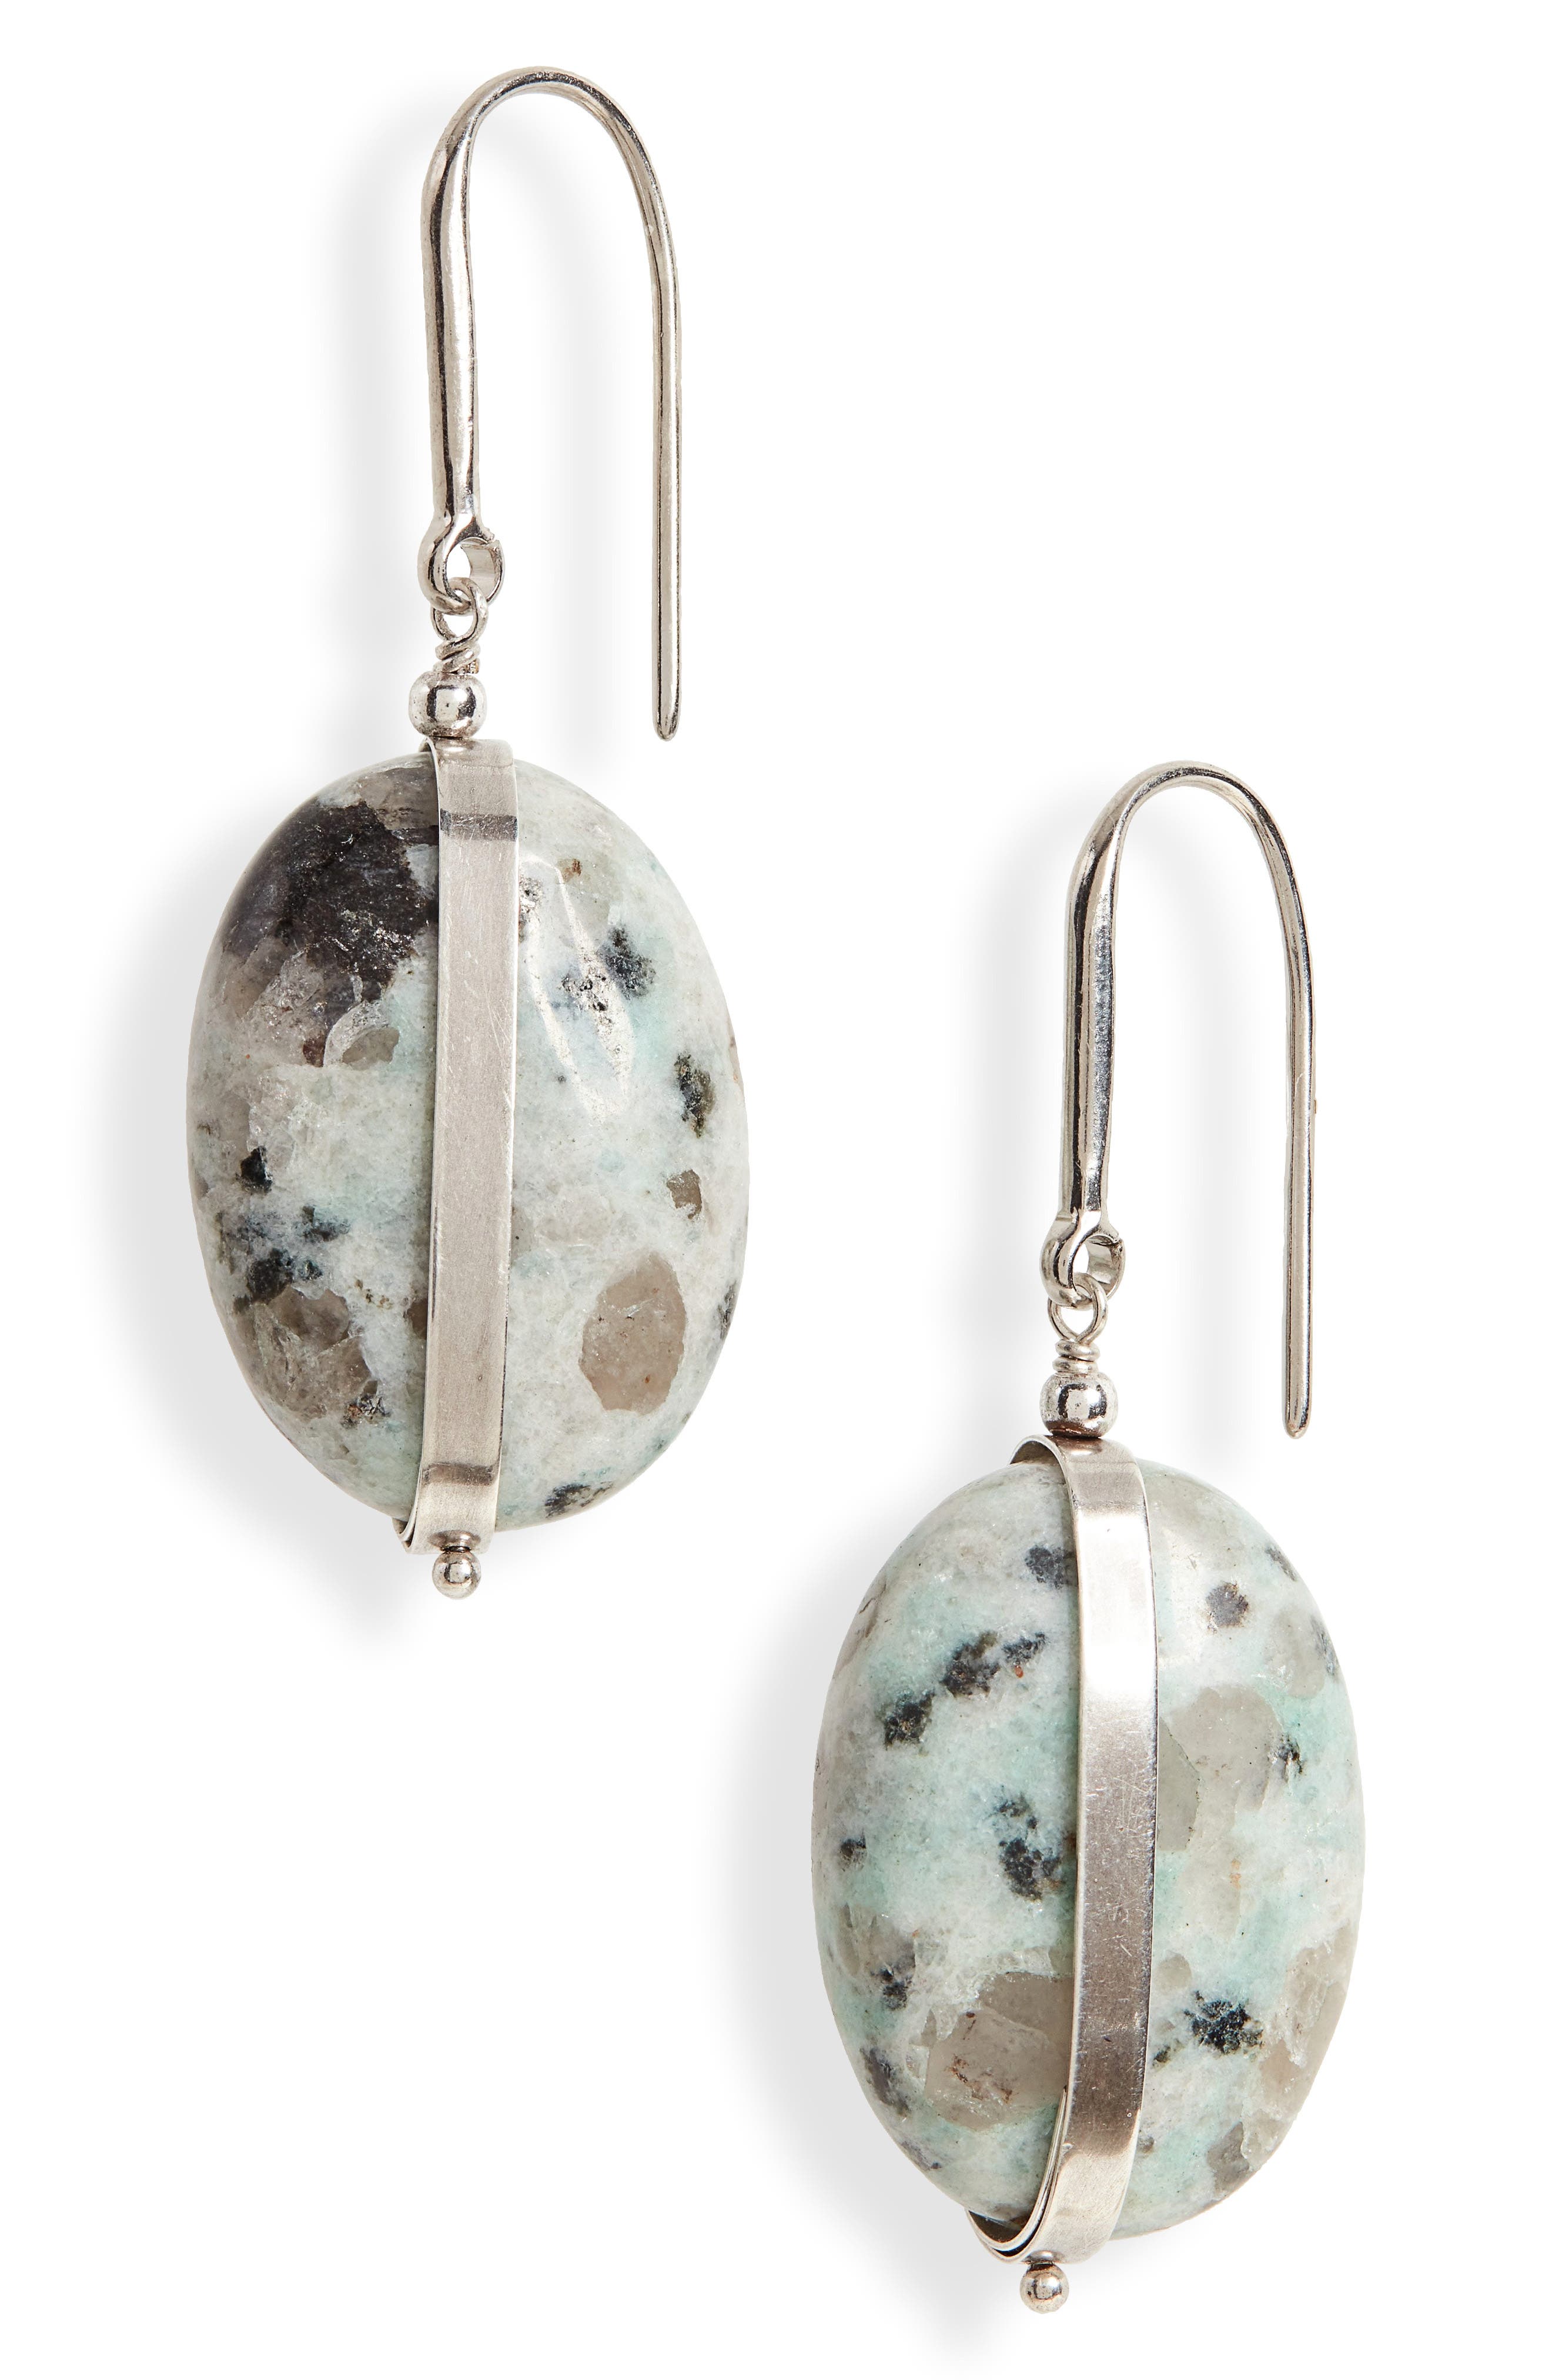 Isabel Marant Stone Drop Earrings in Aqua /Silver at Nordstrom